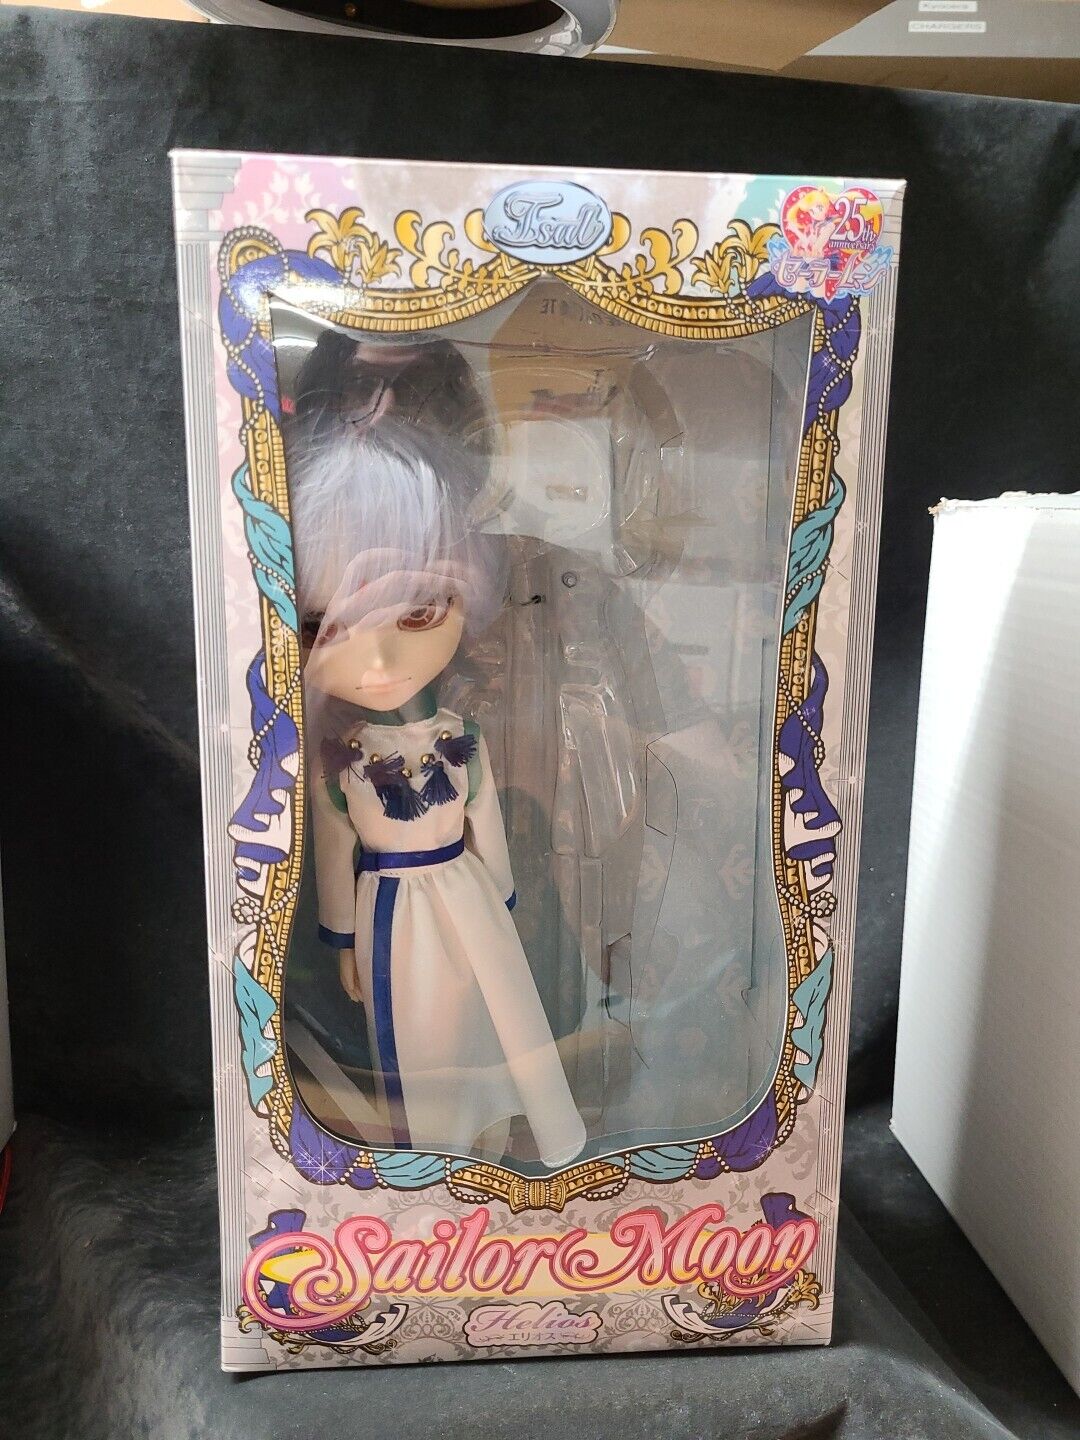 Pullip Sailor Moon Helios I-943 Fashion Doll Action Figure Groove Isul US seller